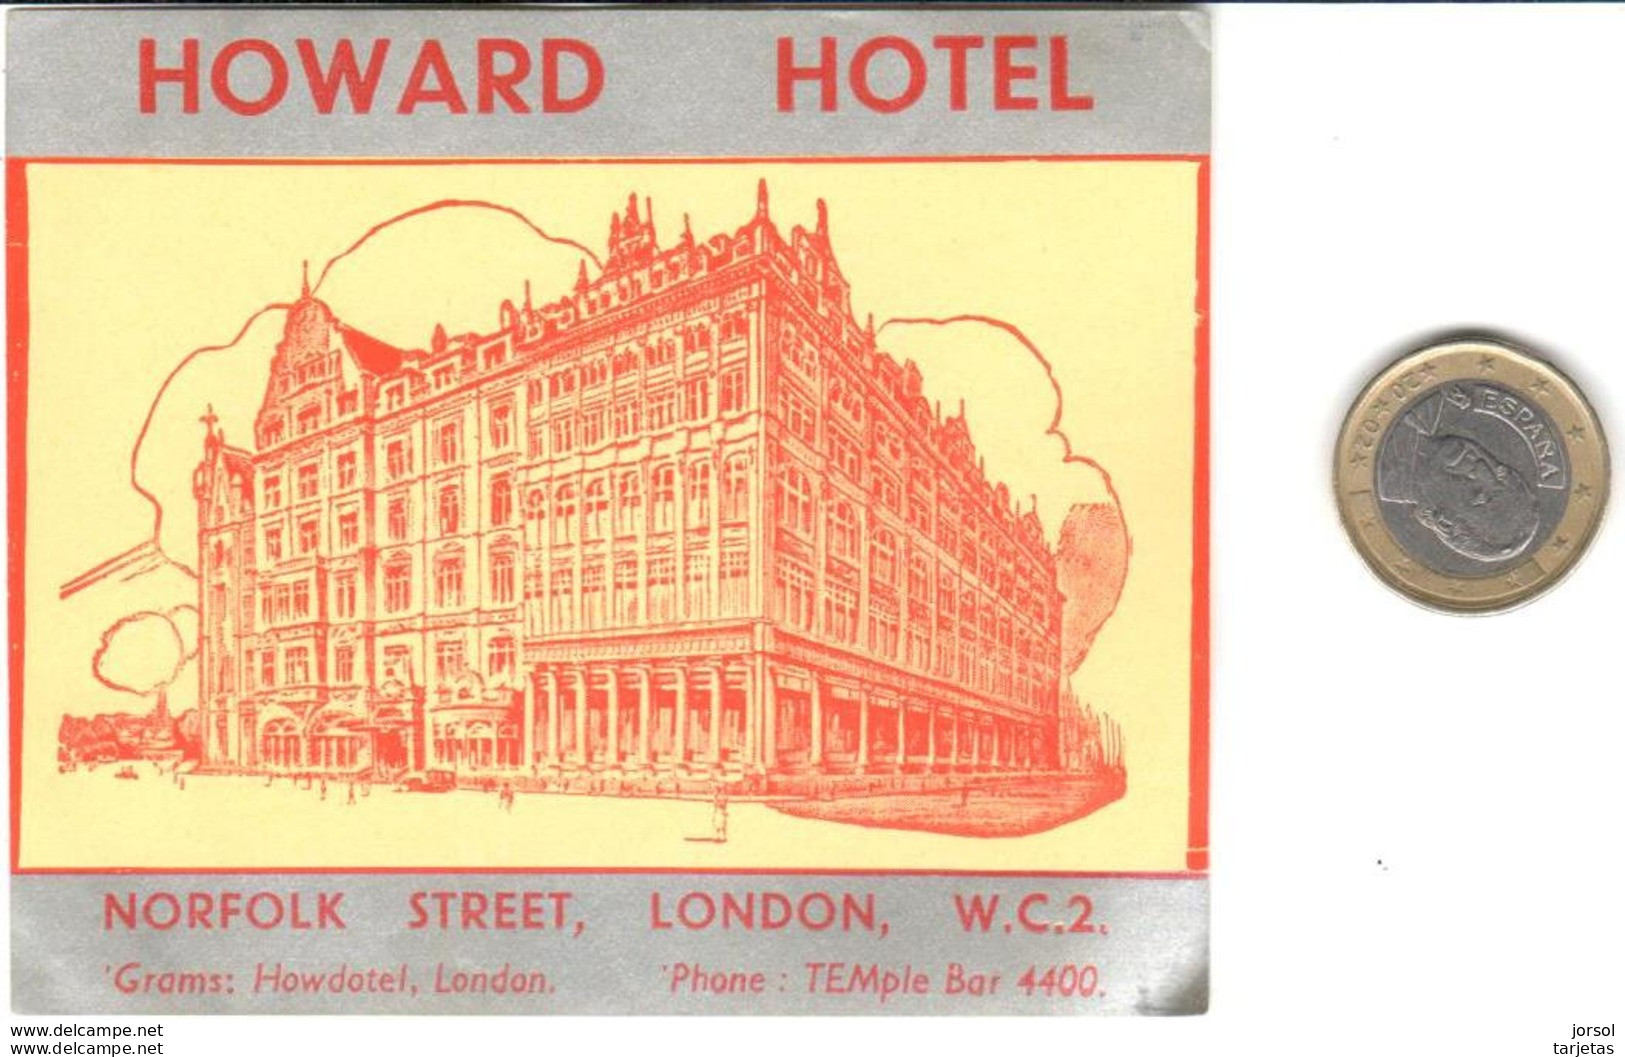 ETIQUETA DE HOTEL  - HOWARD HOTEL  -LONDON - Etiquettes D'hotels